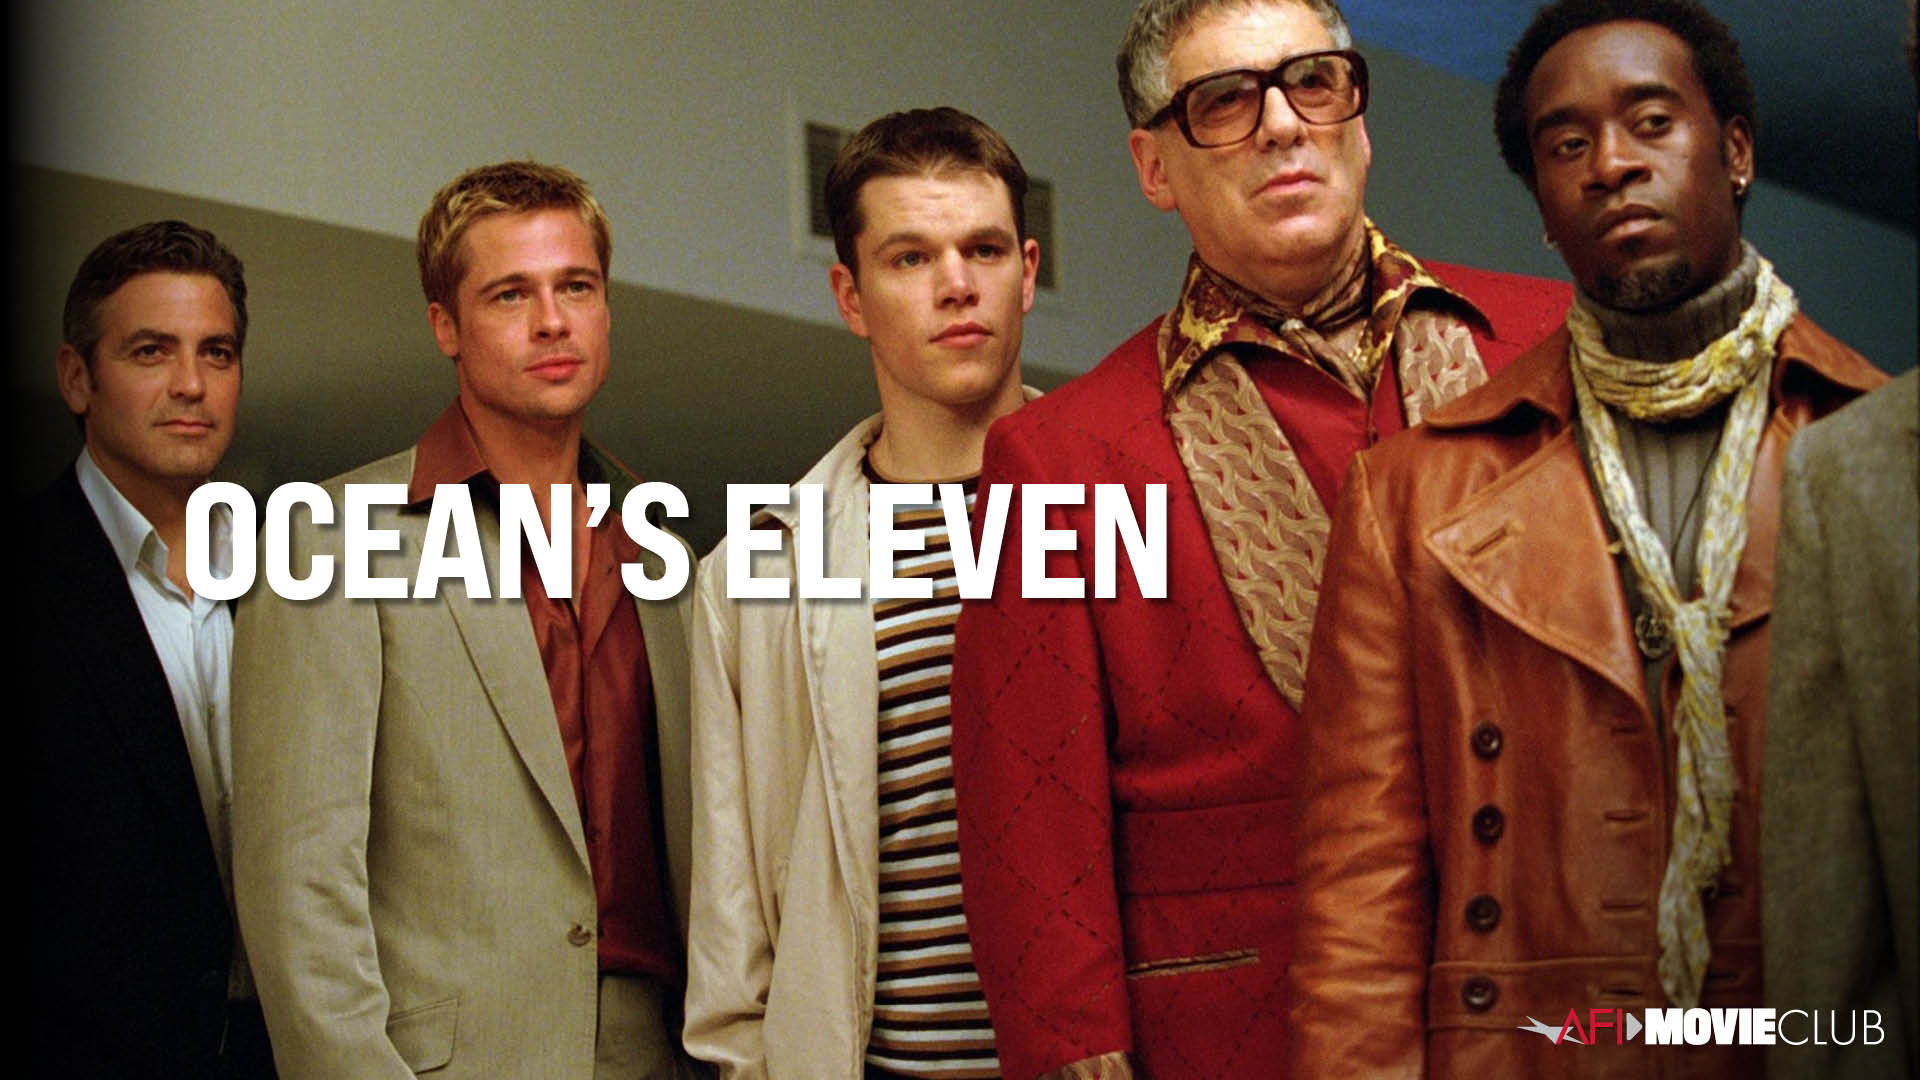 Ocean's Eleven Film Still - Brad Pitt, George Clooney, Don Cheadle, Matt Damon, and Elliott Gould